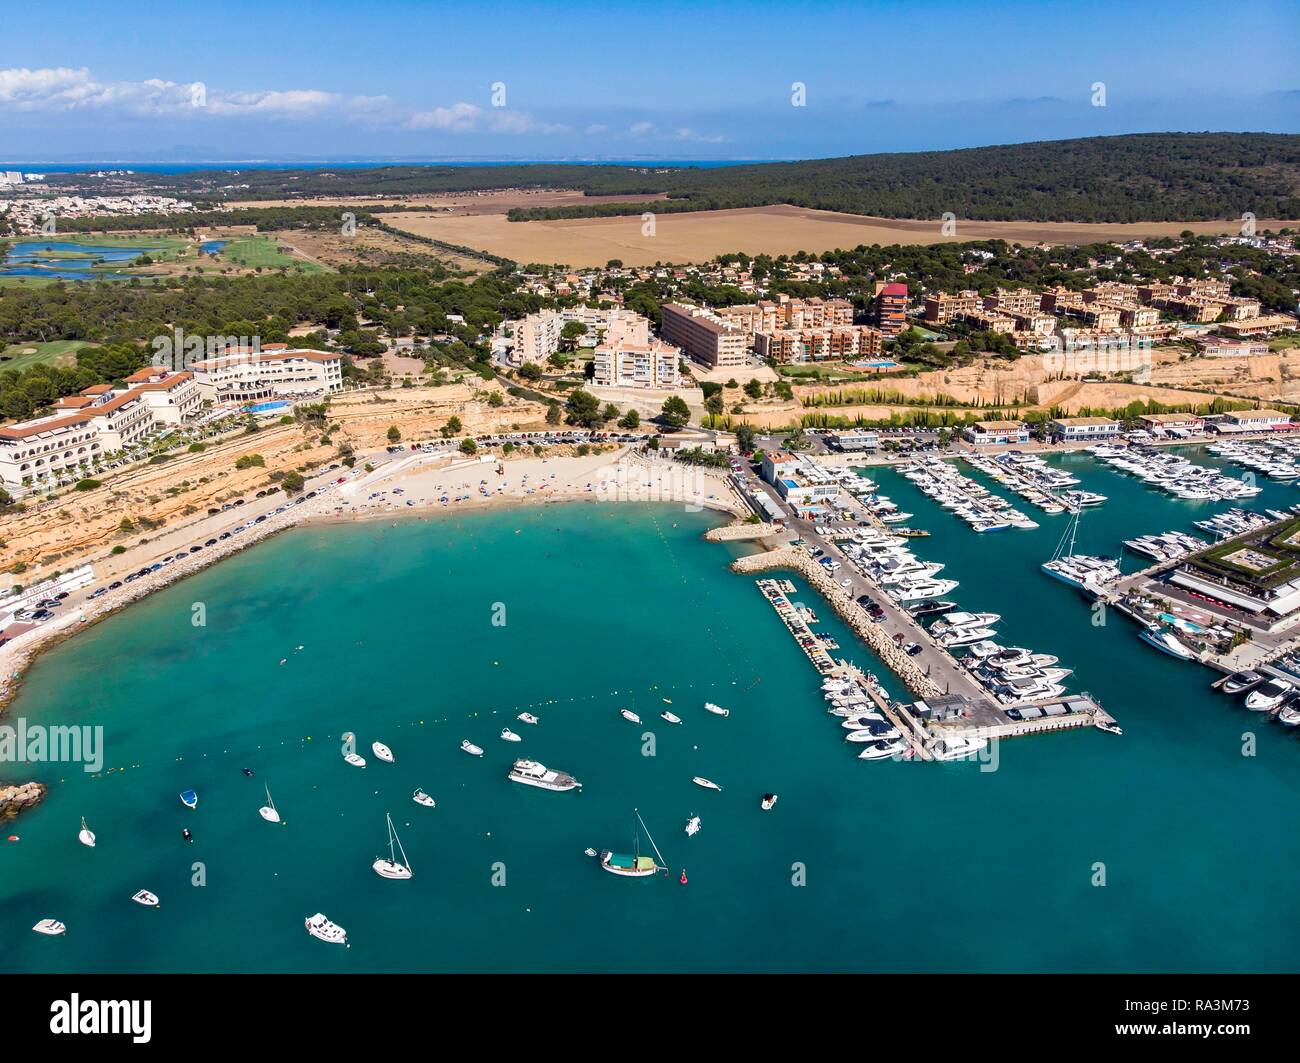 Vista aerea, Marina Port Adriano, El Toro, regione Santa Ponca, Maiorca, isole Baleari, Spagna Foto Stock